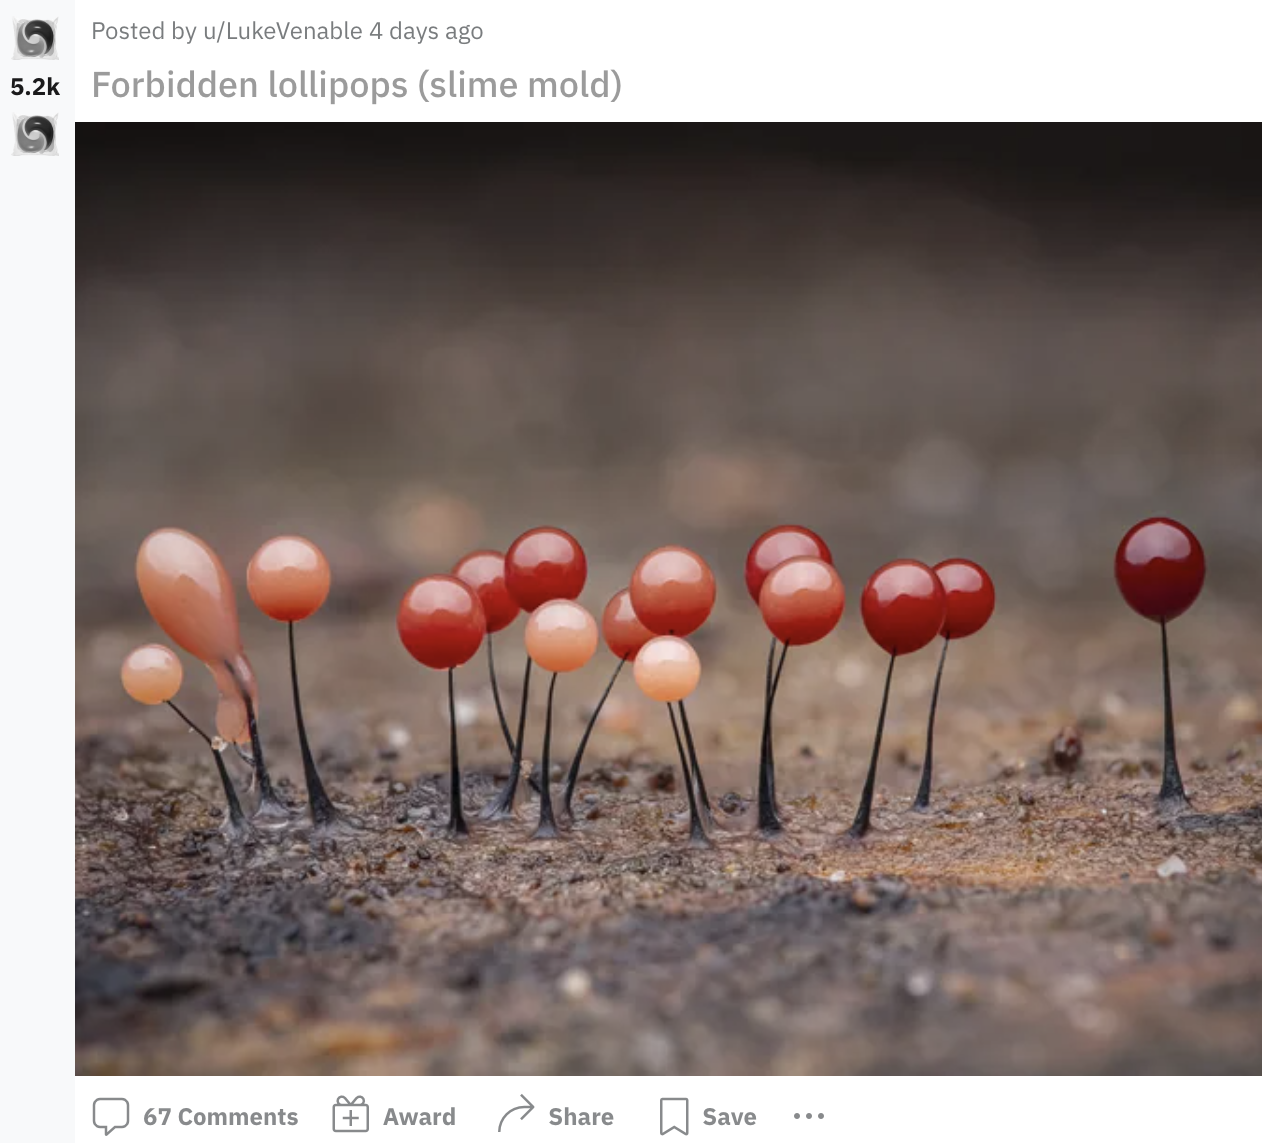 shiny orbs on sticks that resemble lollipops